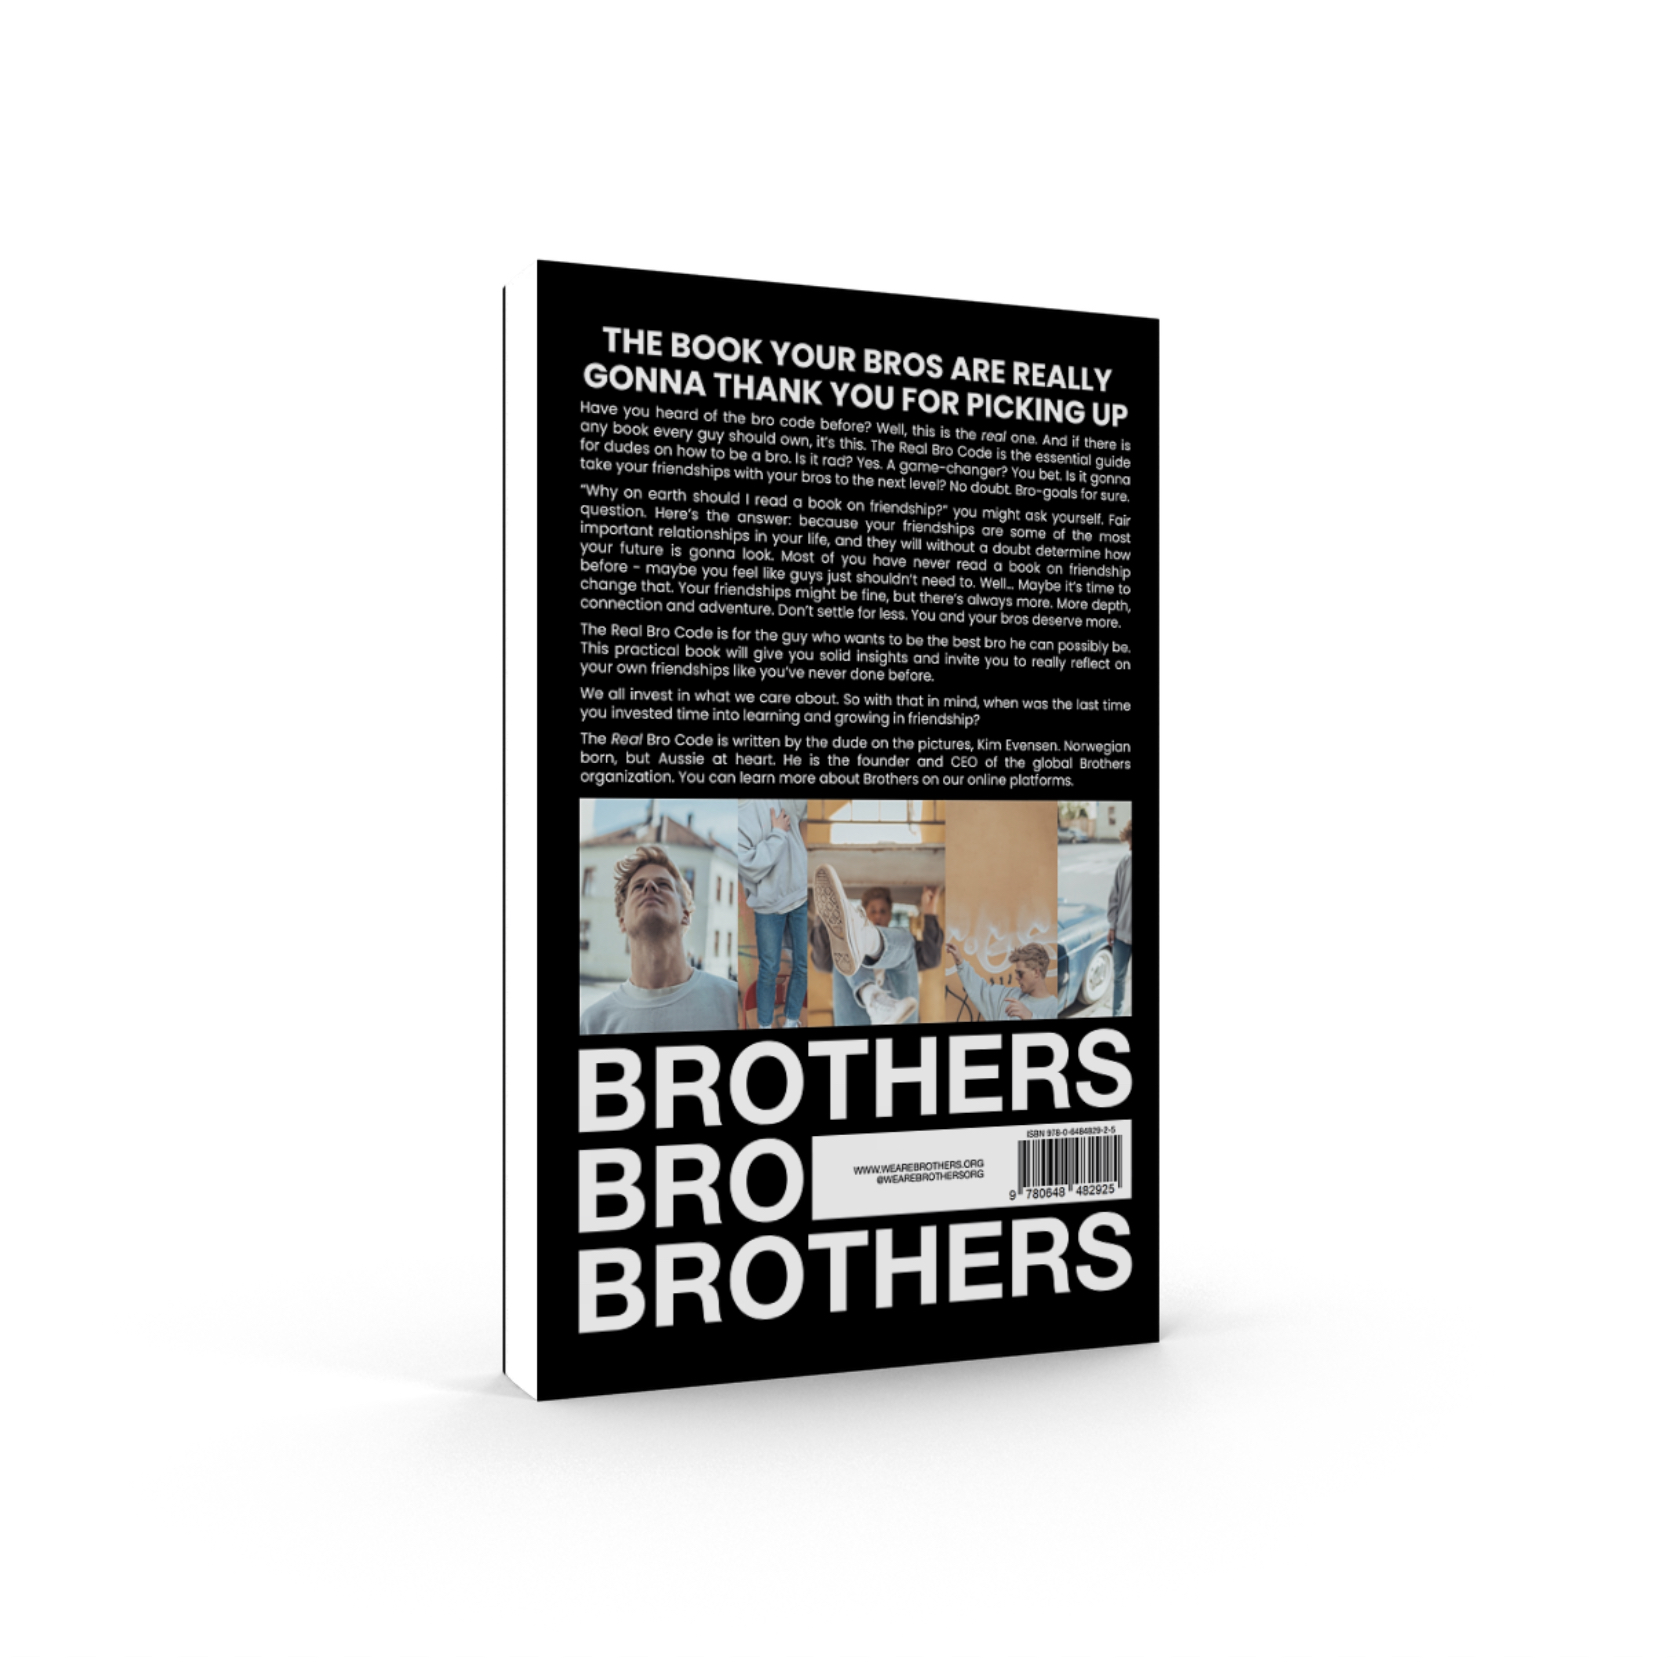 the real bro code _ meme 7 _ the brothers organization _ kim